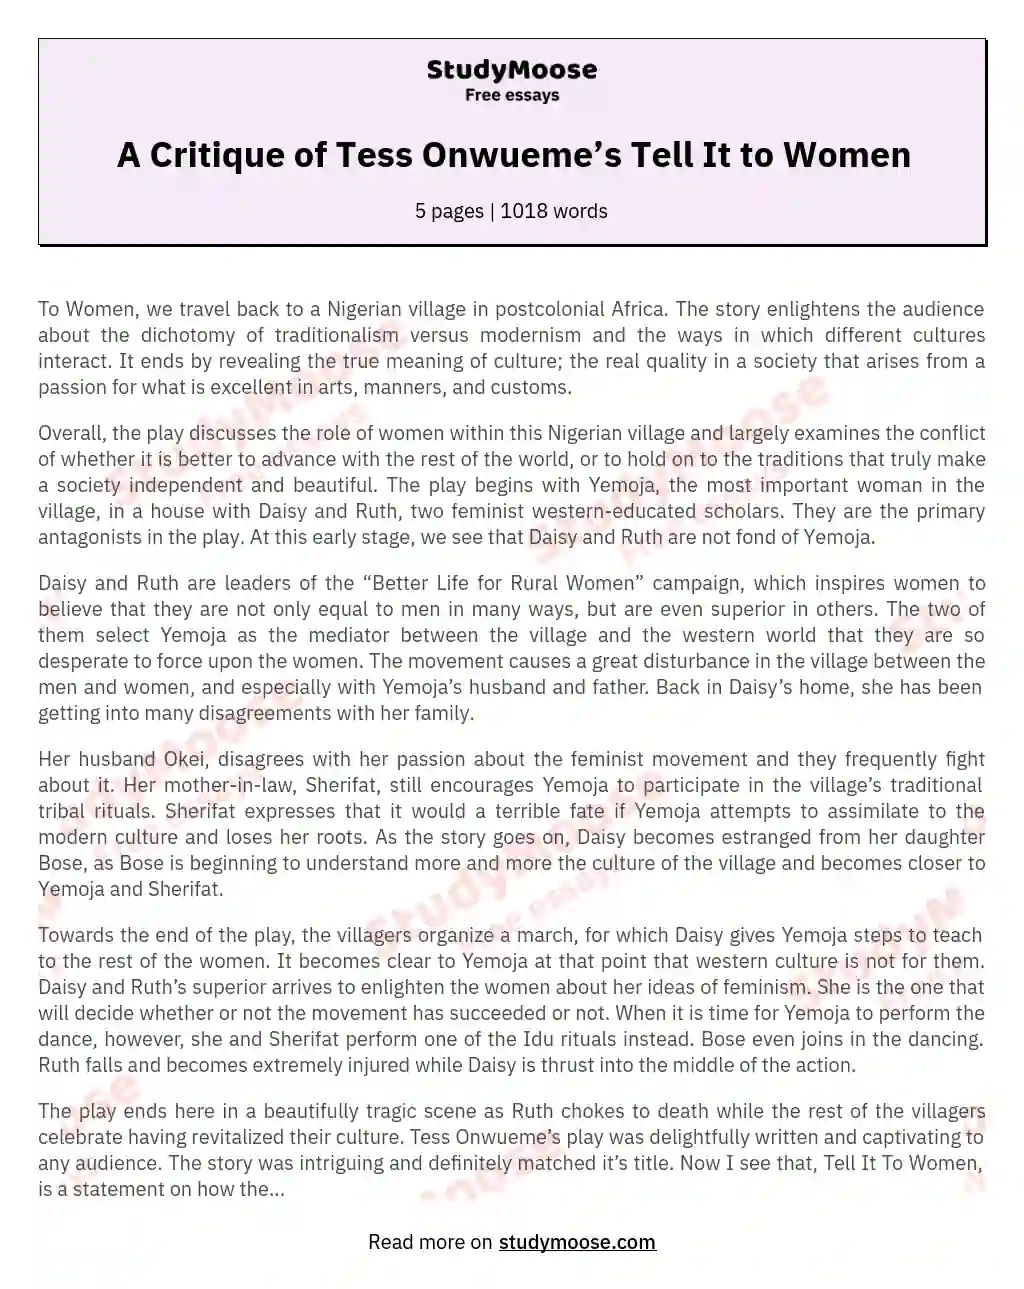 A Critique of Tess Onwueme’s Tell It to Women essay